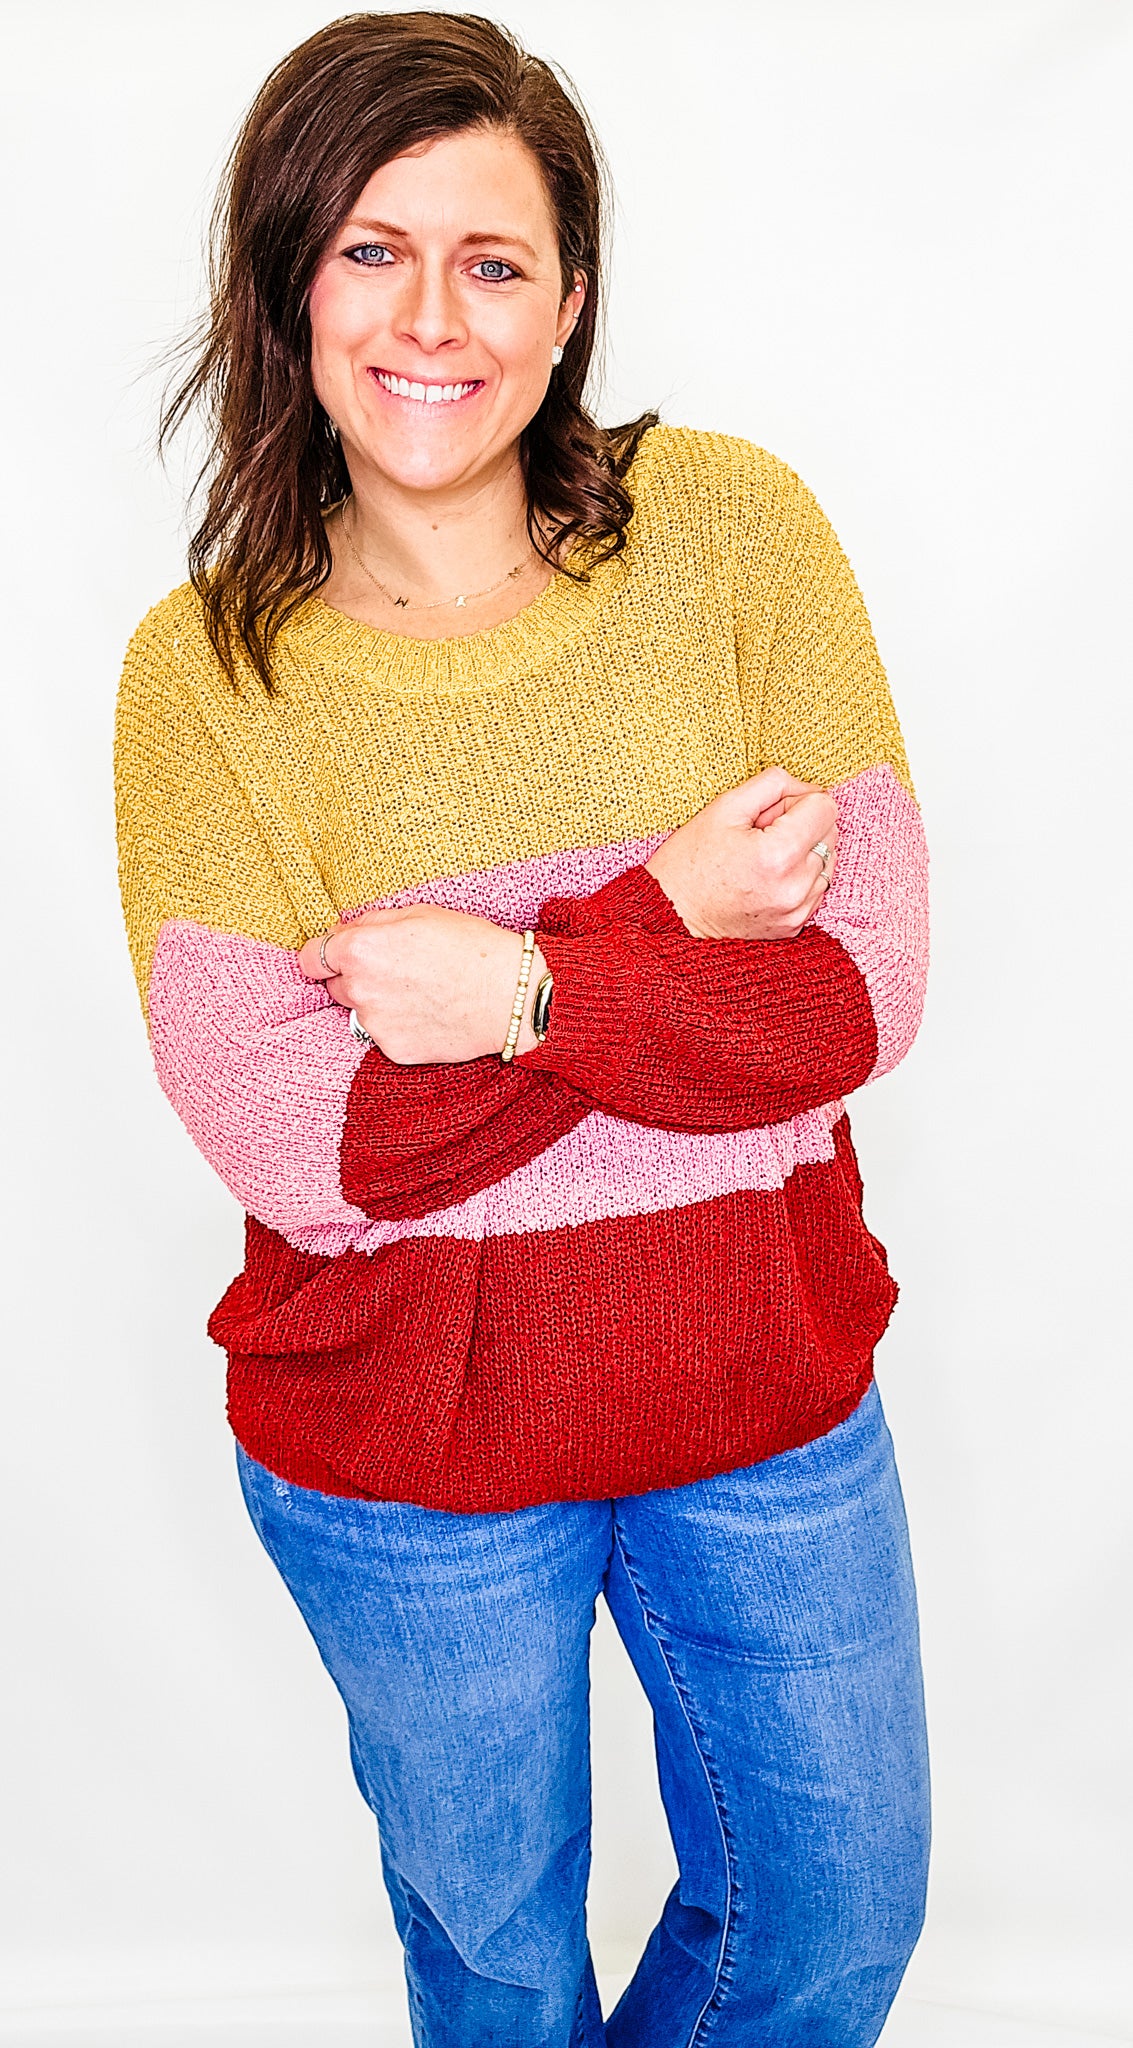 Mustard, Pink & Wine Color Block Sweater